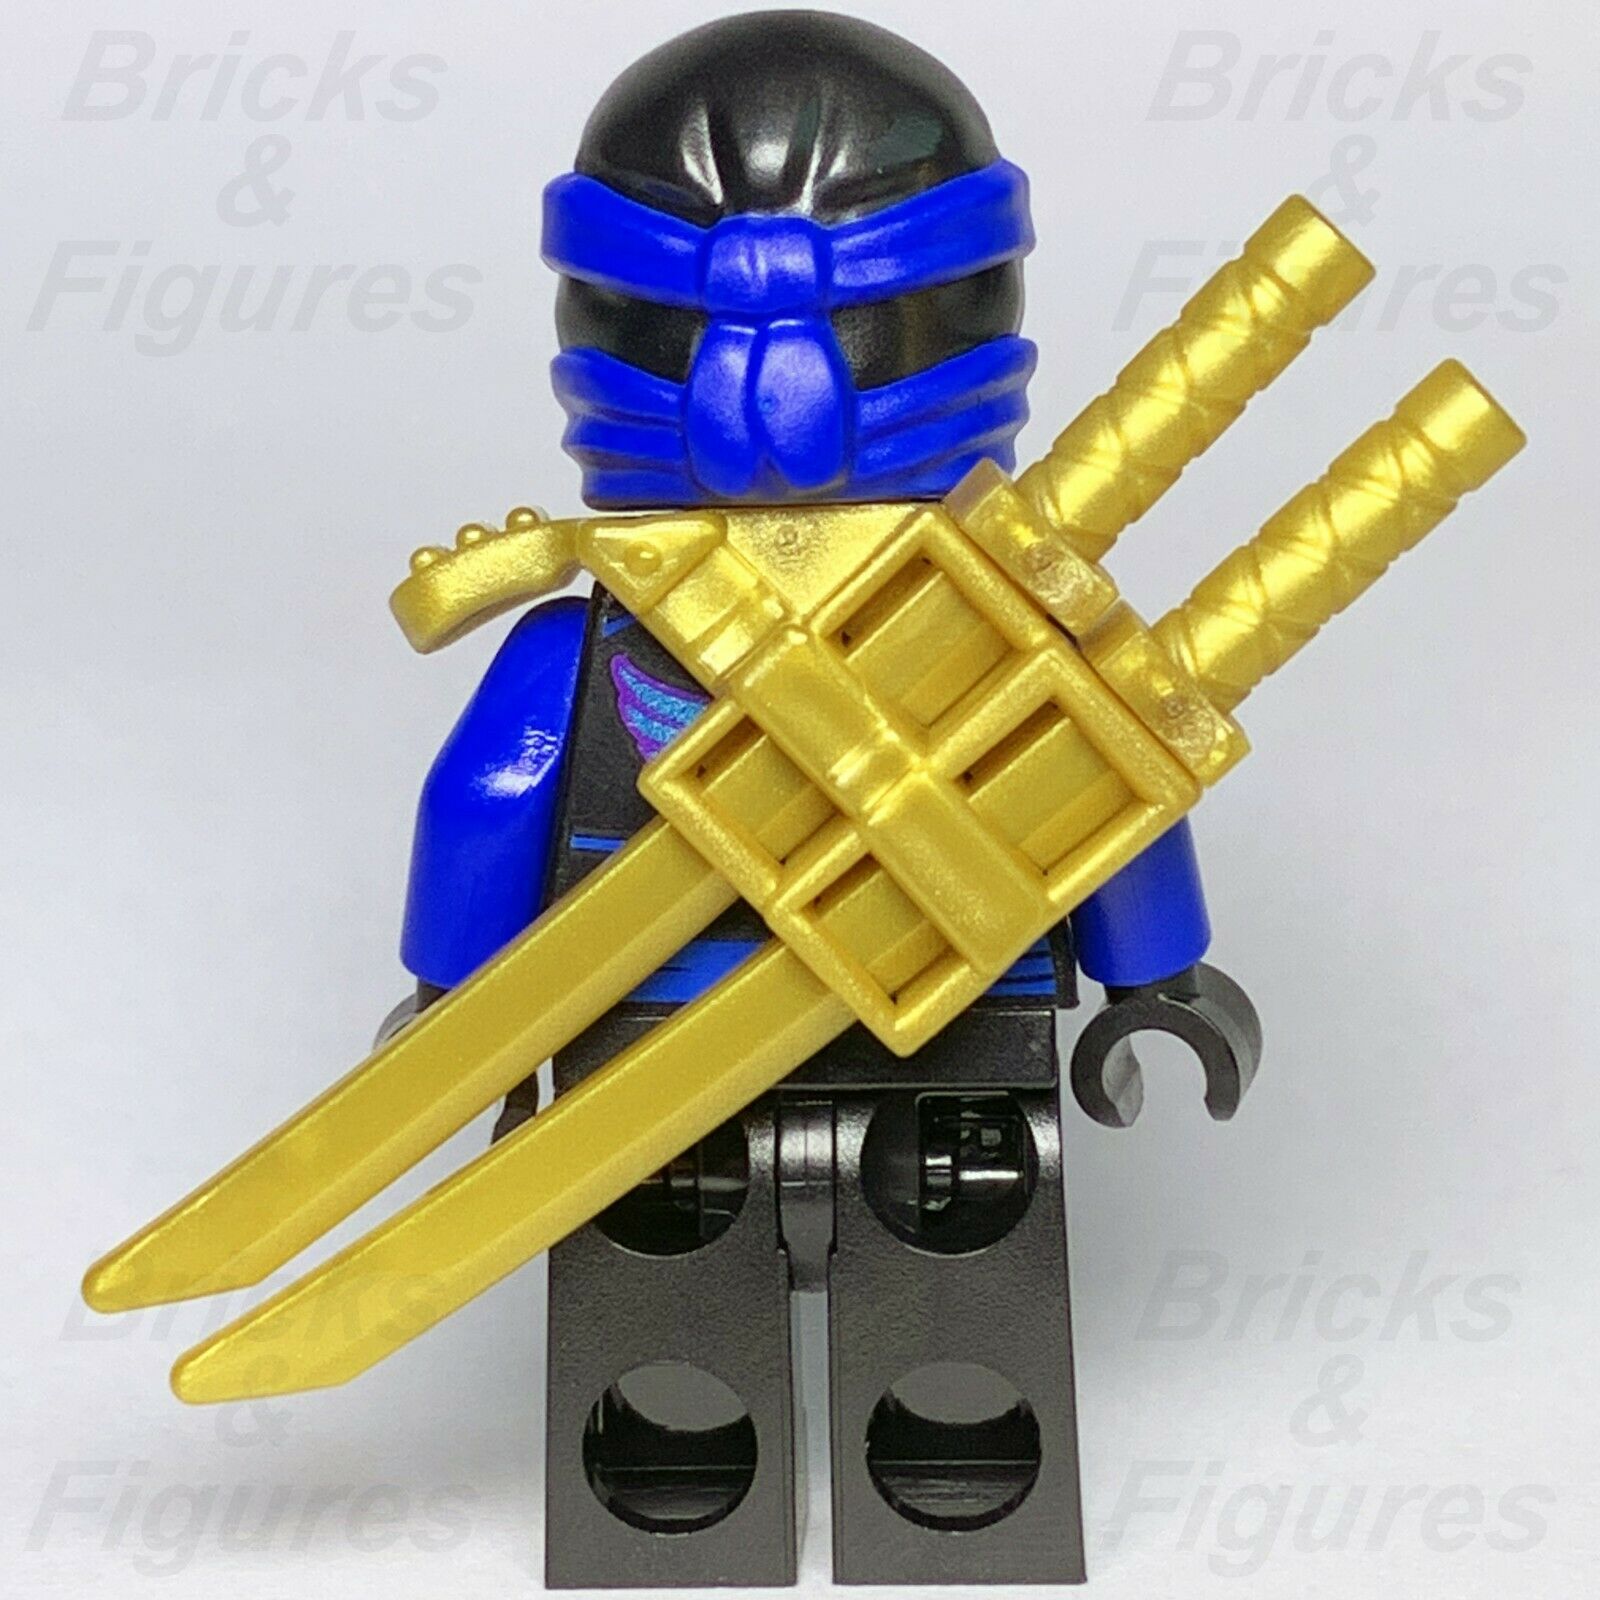 New Genuine Ninjago LEGO Ninja Jay Skybound Minifigure from set 70602 - Bricks & Figures